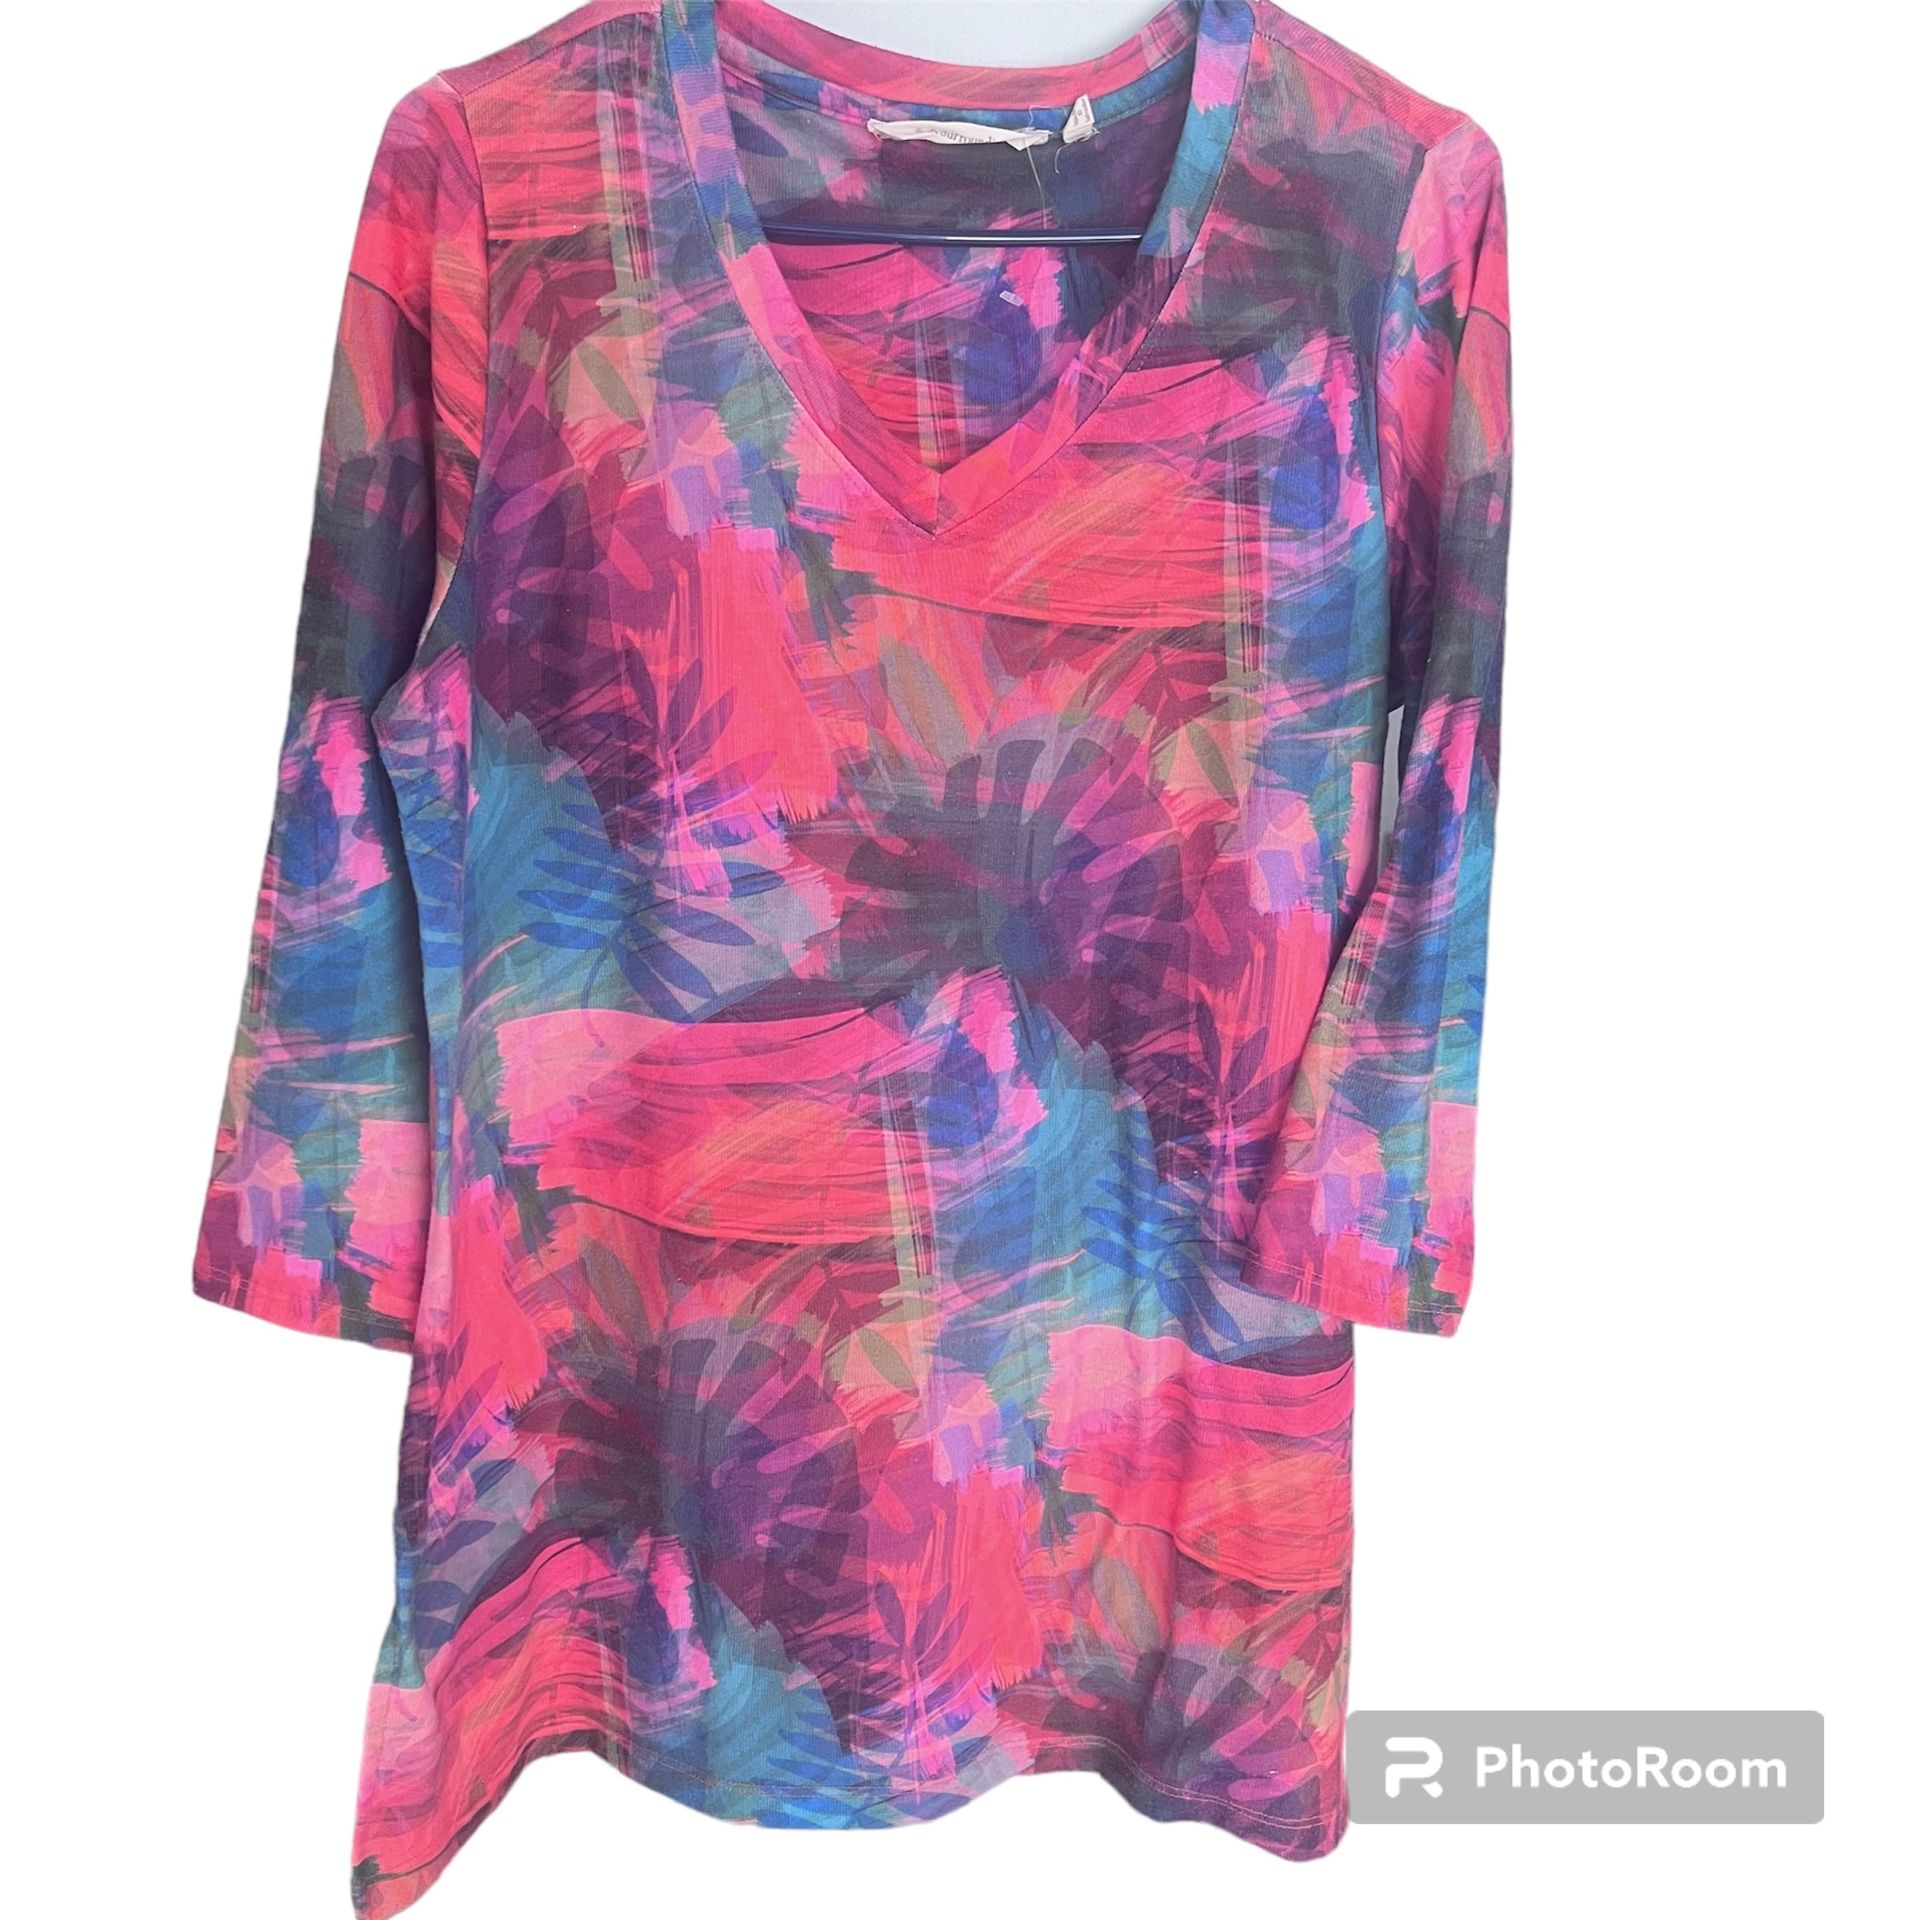 Soft Surroundings Blouse Women’s Sz Medium Shirt Floral Top 3/4 Sleeve Pink